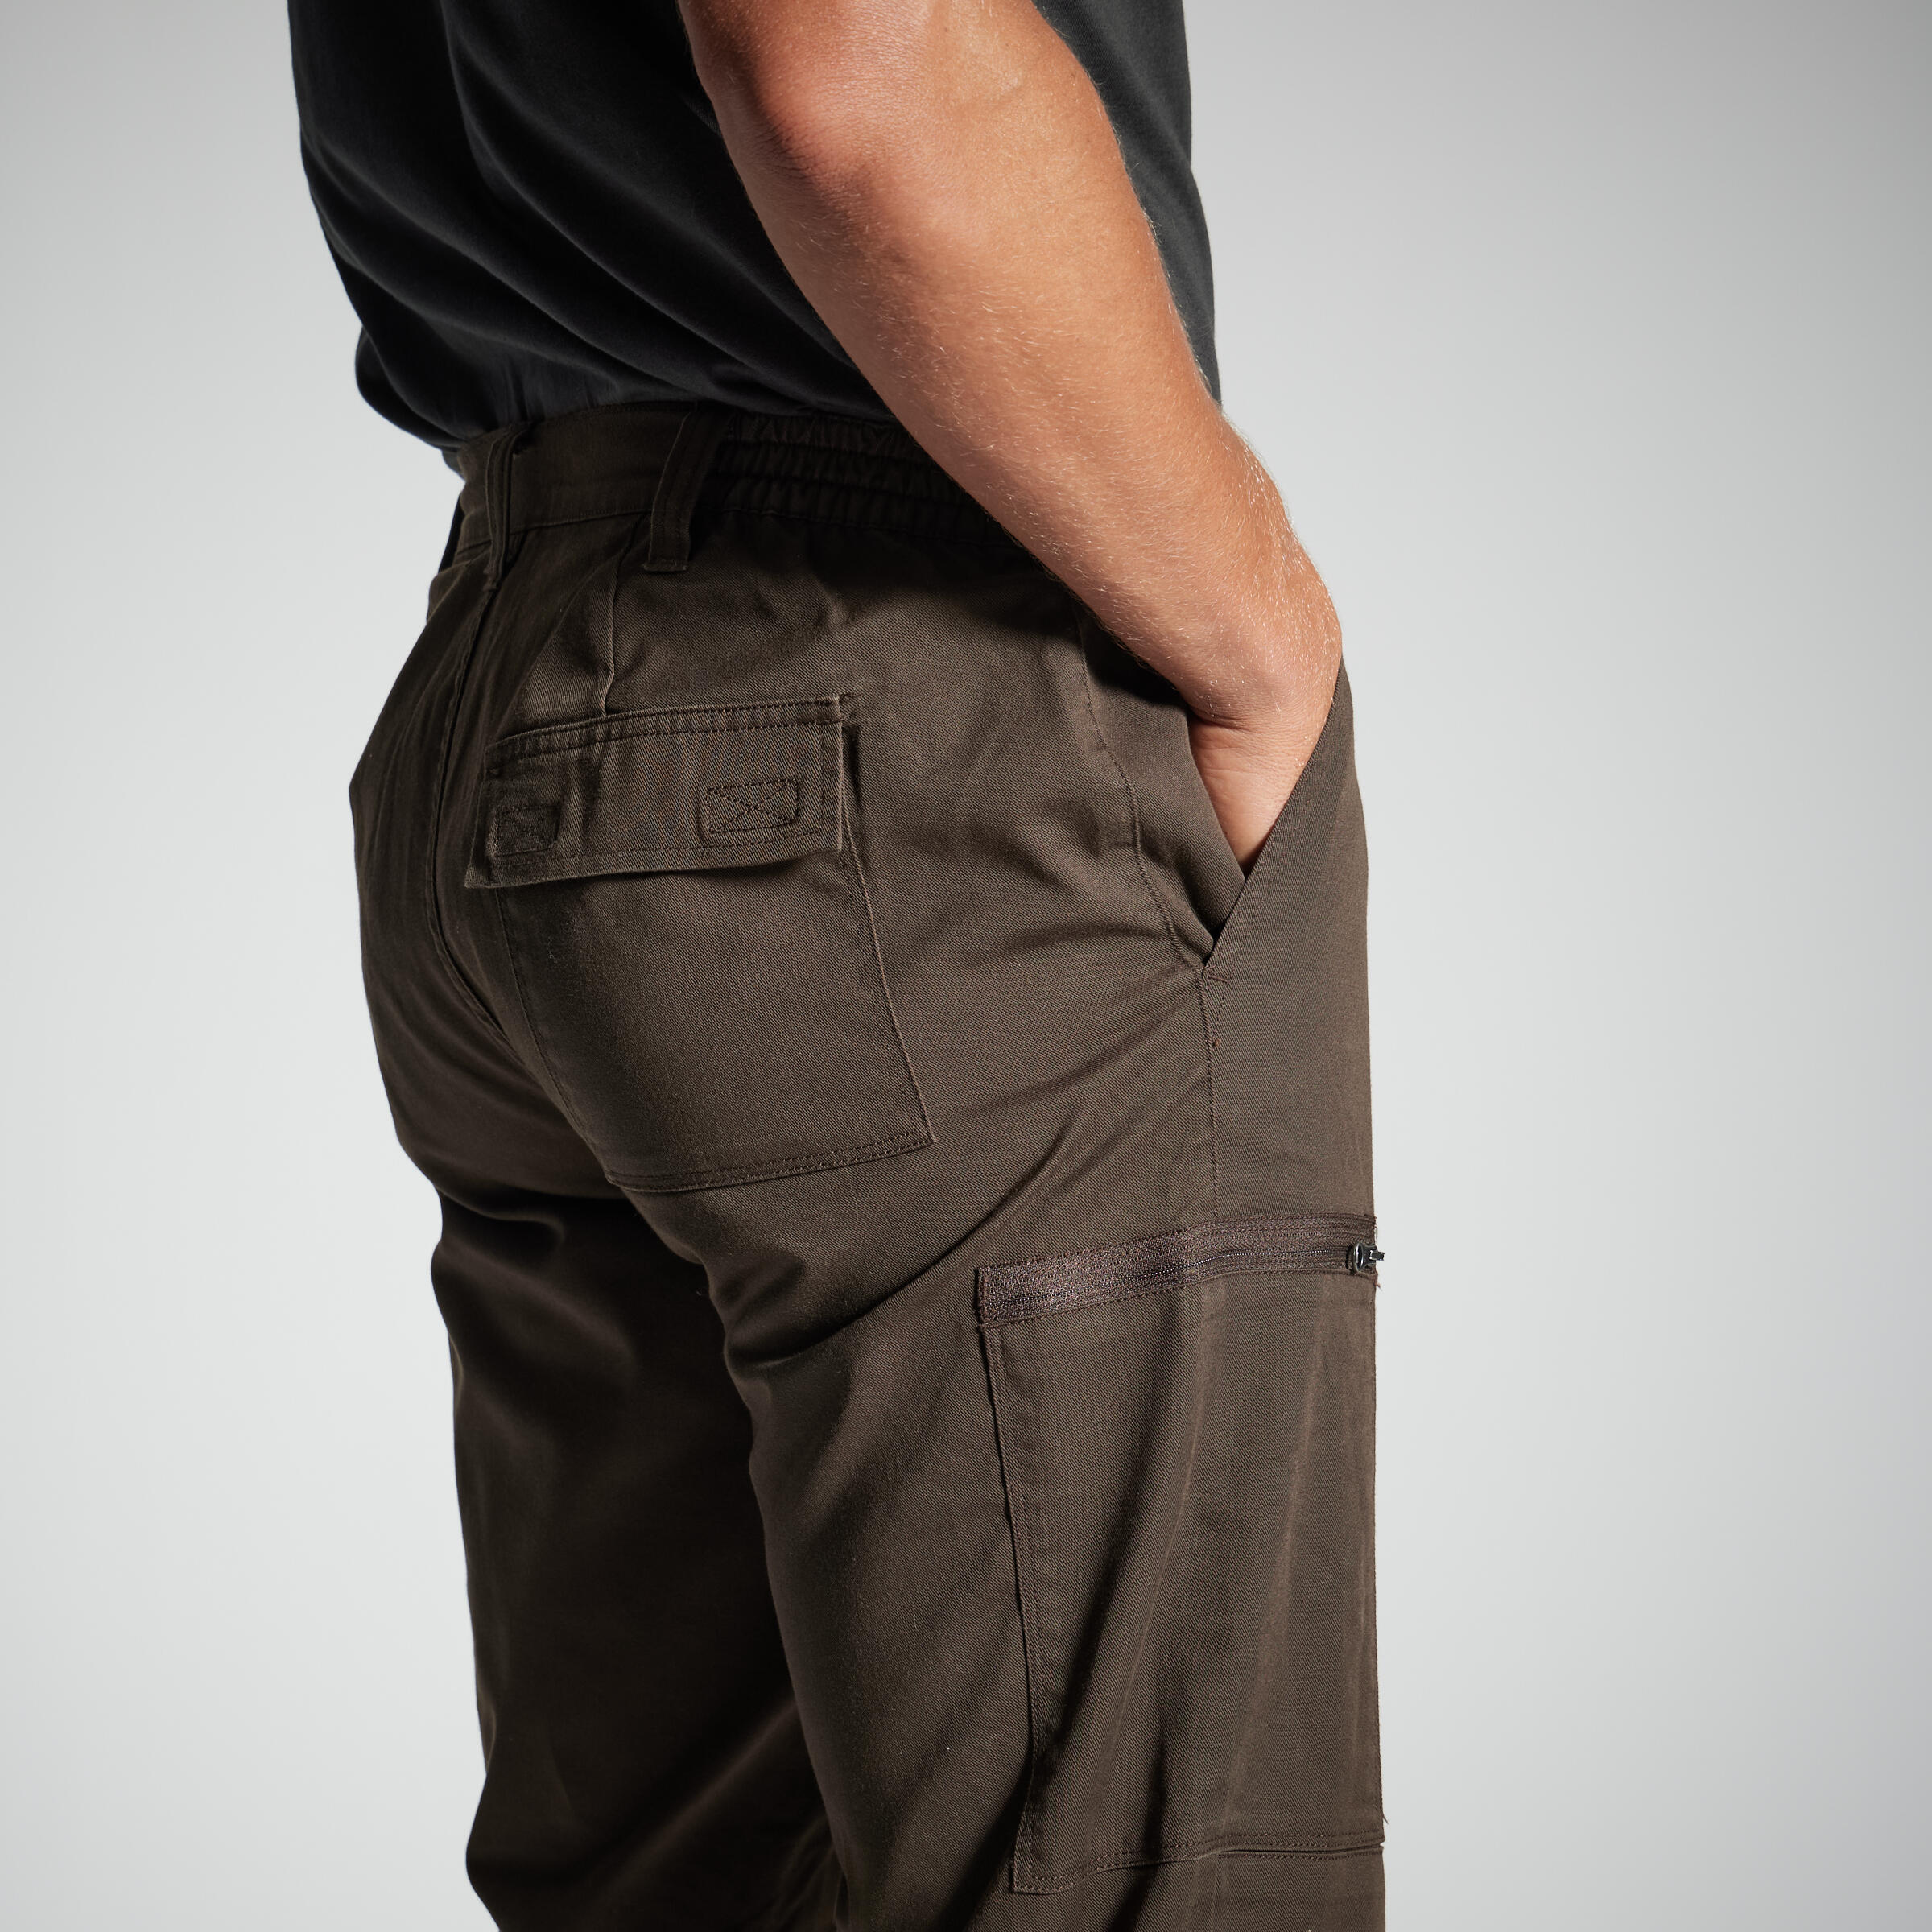 Men Cargo Trousers Pants SG-100 - Green